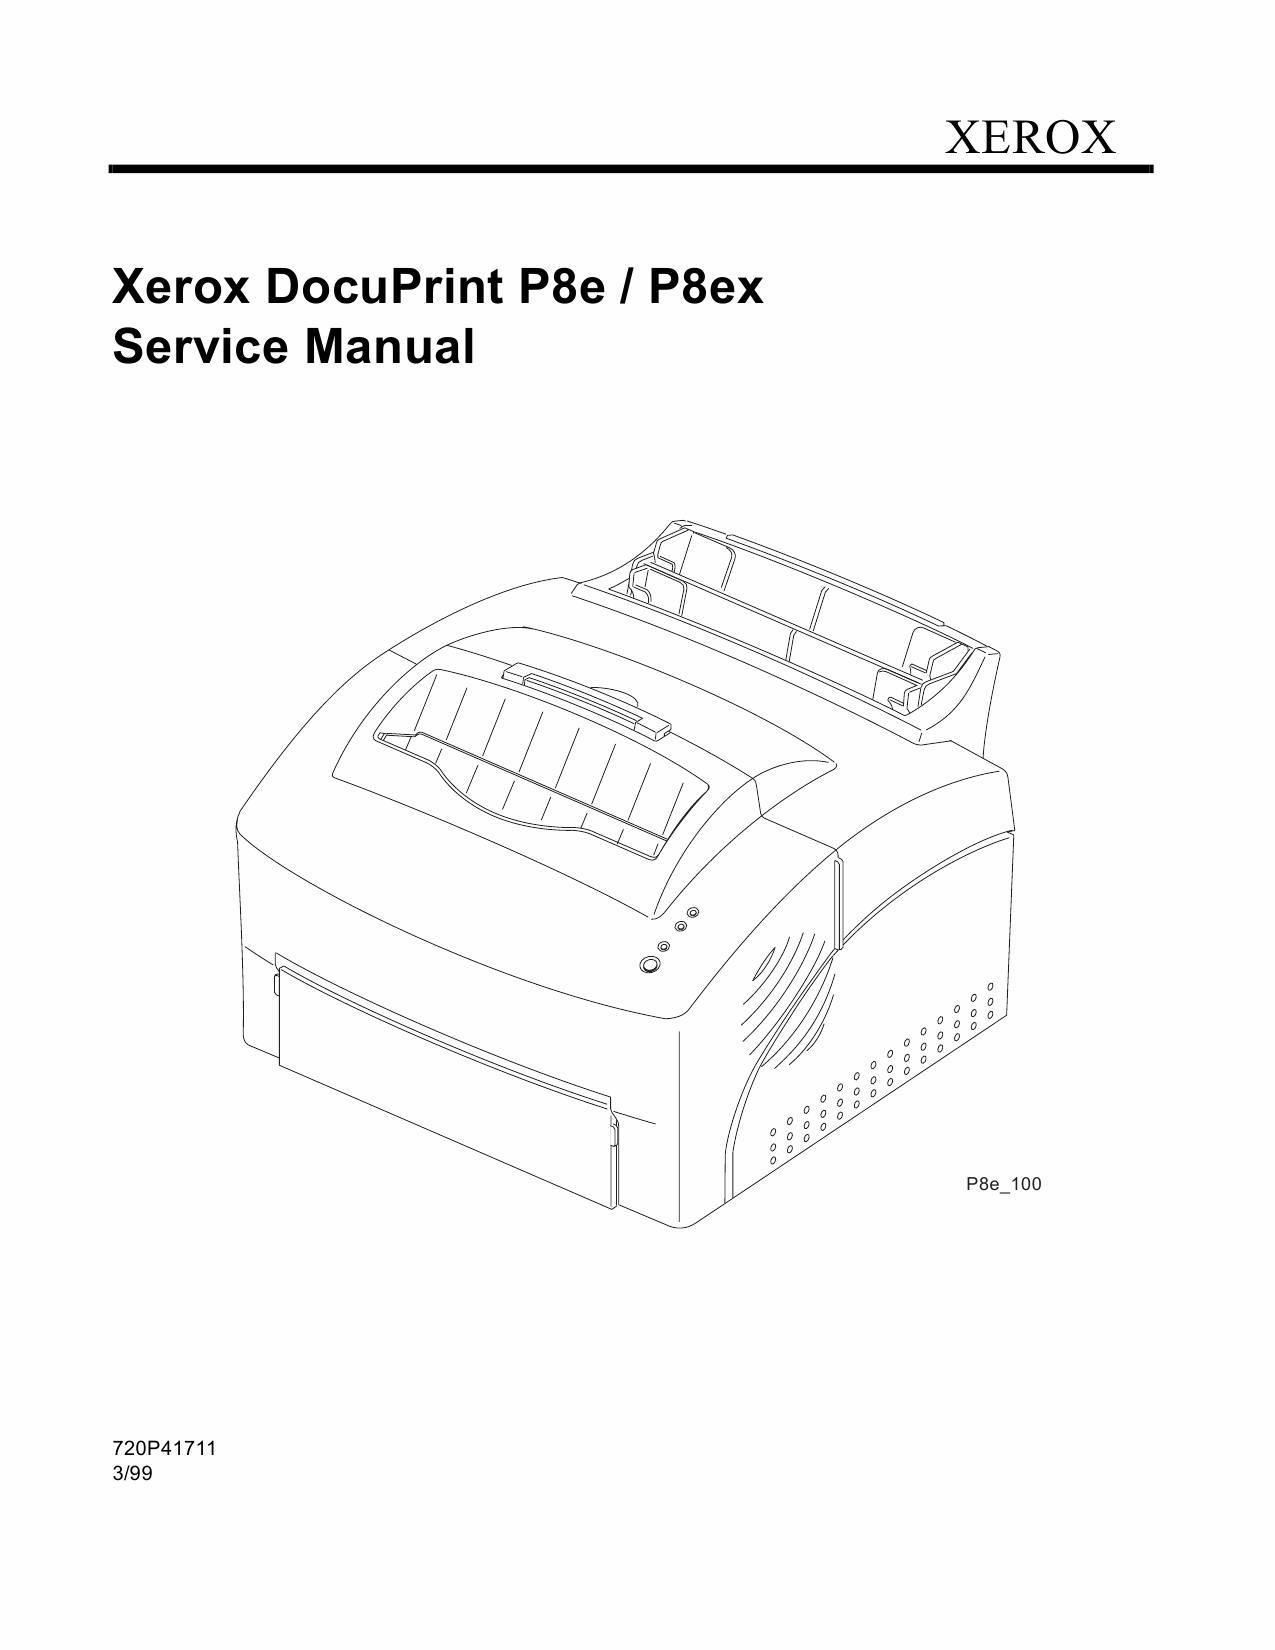 Xerox DocuPrint P8e P8ex Parts List and Service Manual-1